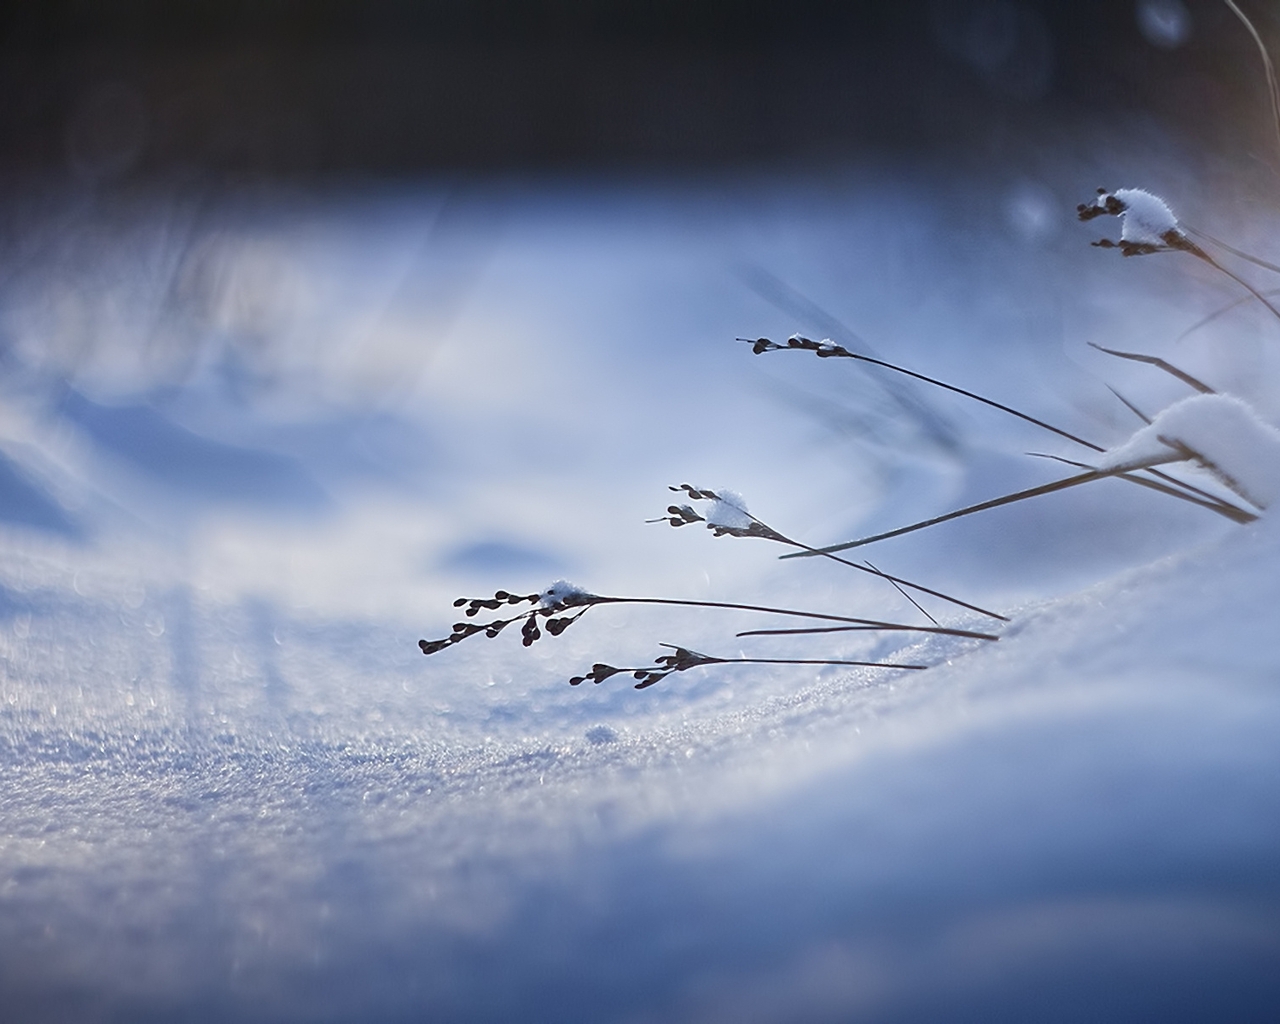 Image: Blade of grass, snow, snowdrift, winter, shadow